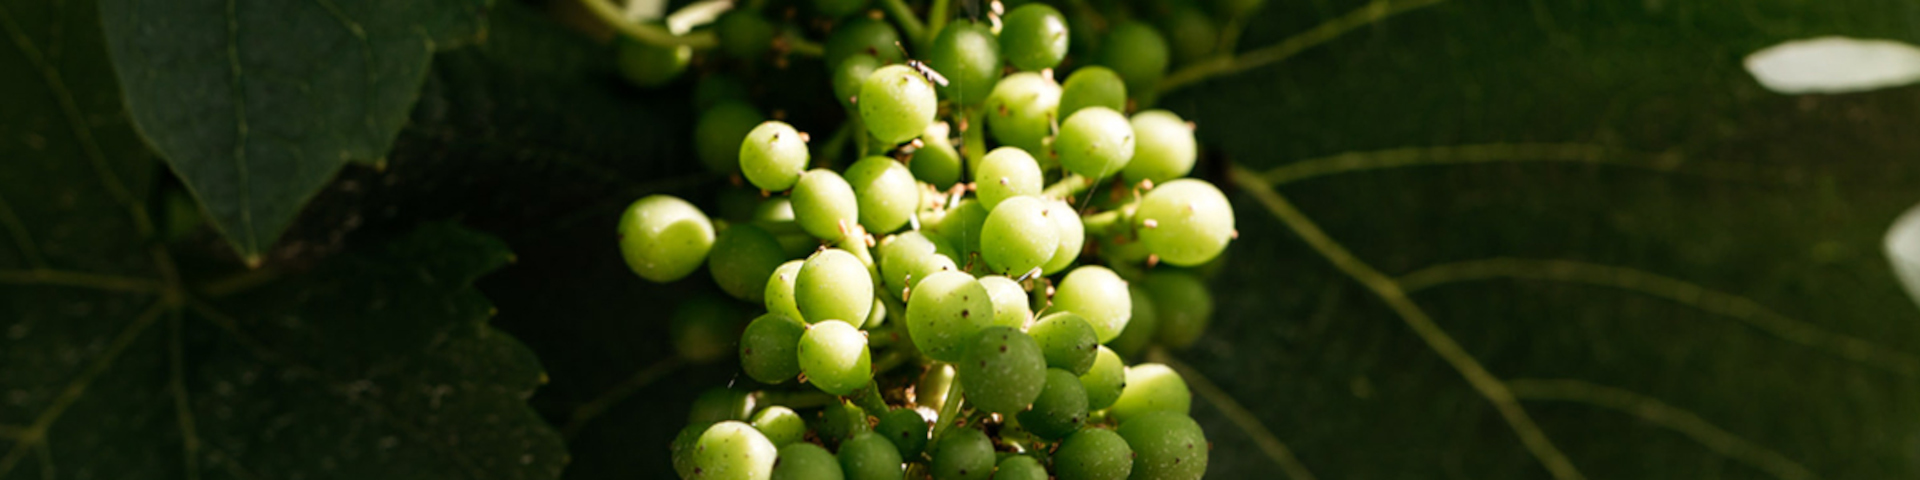 White wine grapes on a vine